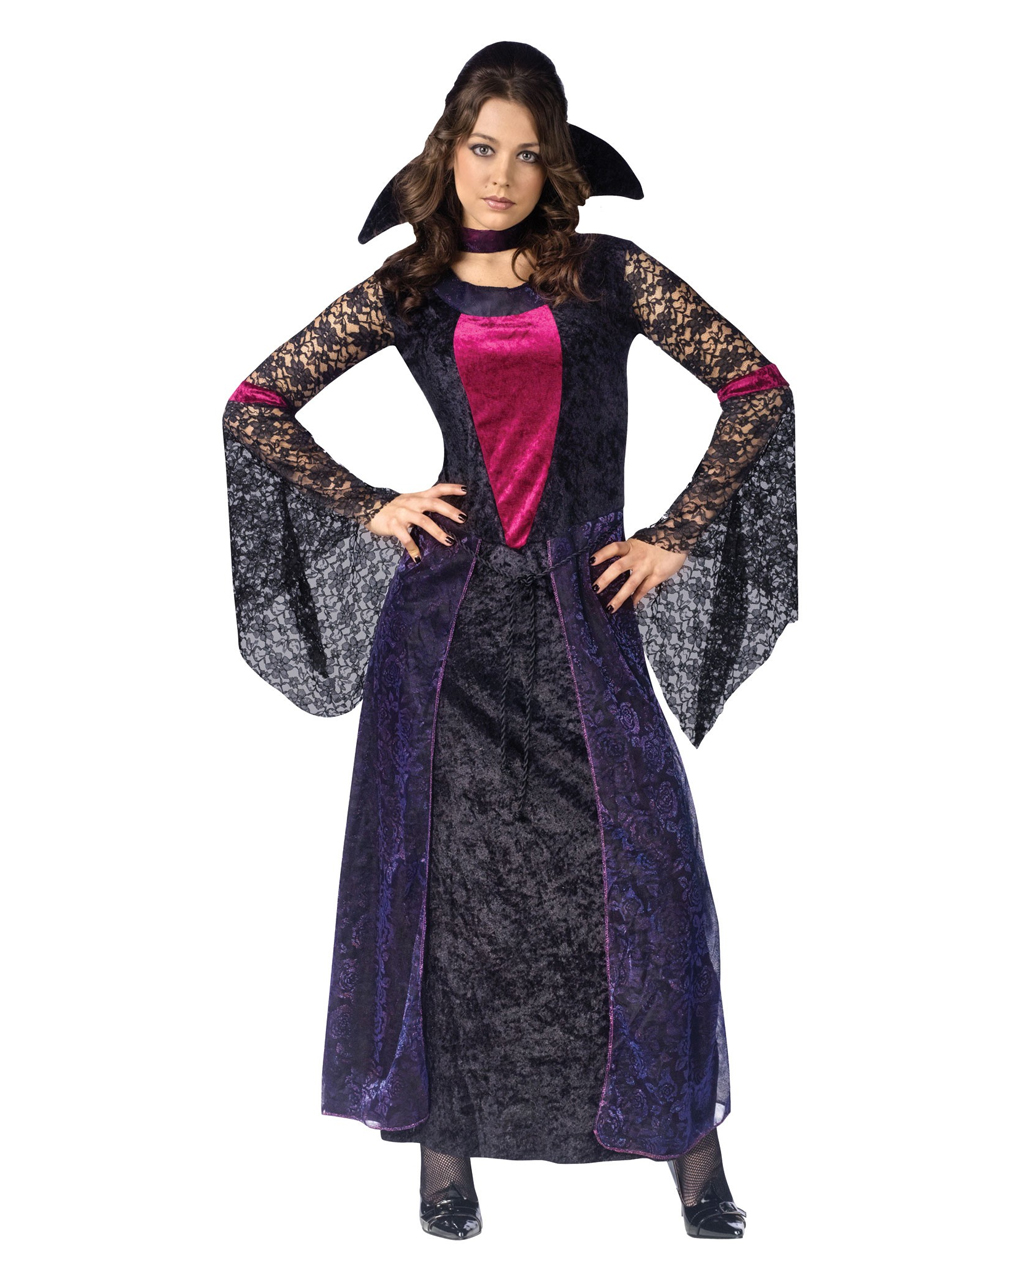 Vamptessa Costume. 40-42 ML | Fancy dress of a vampire princess ...